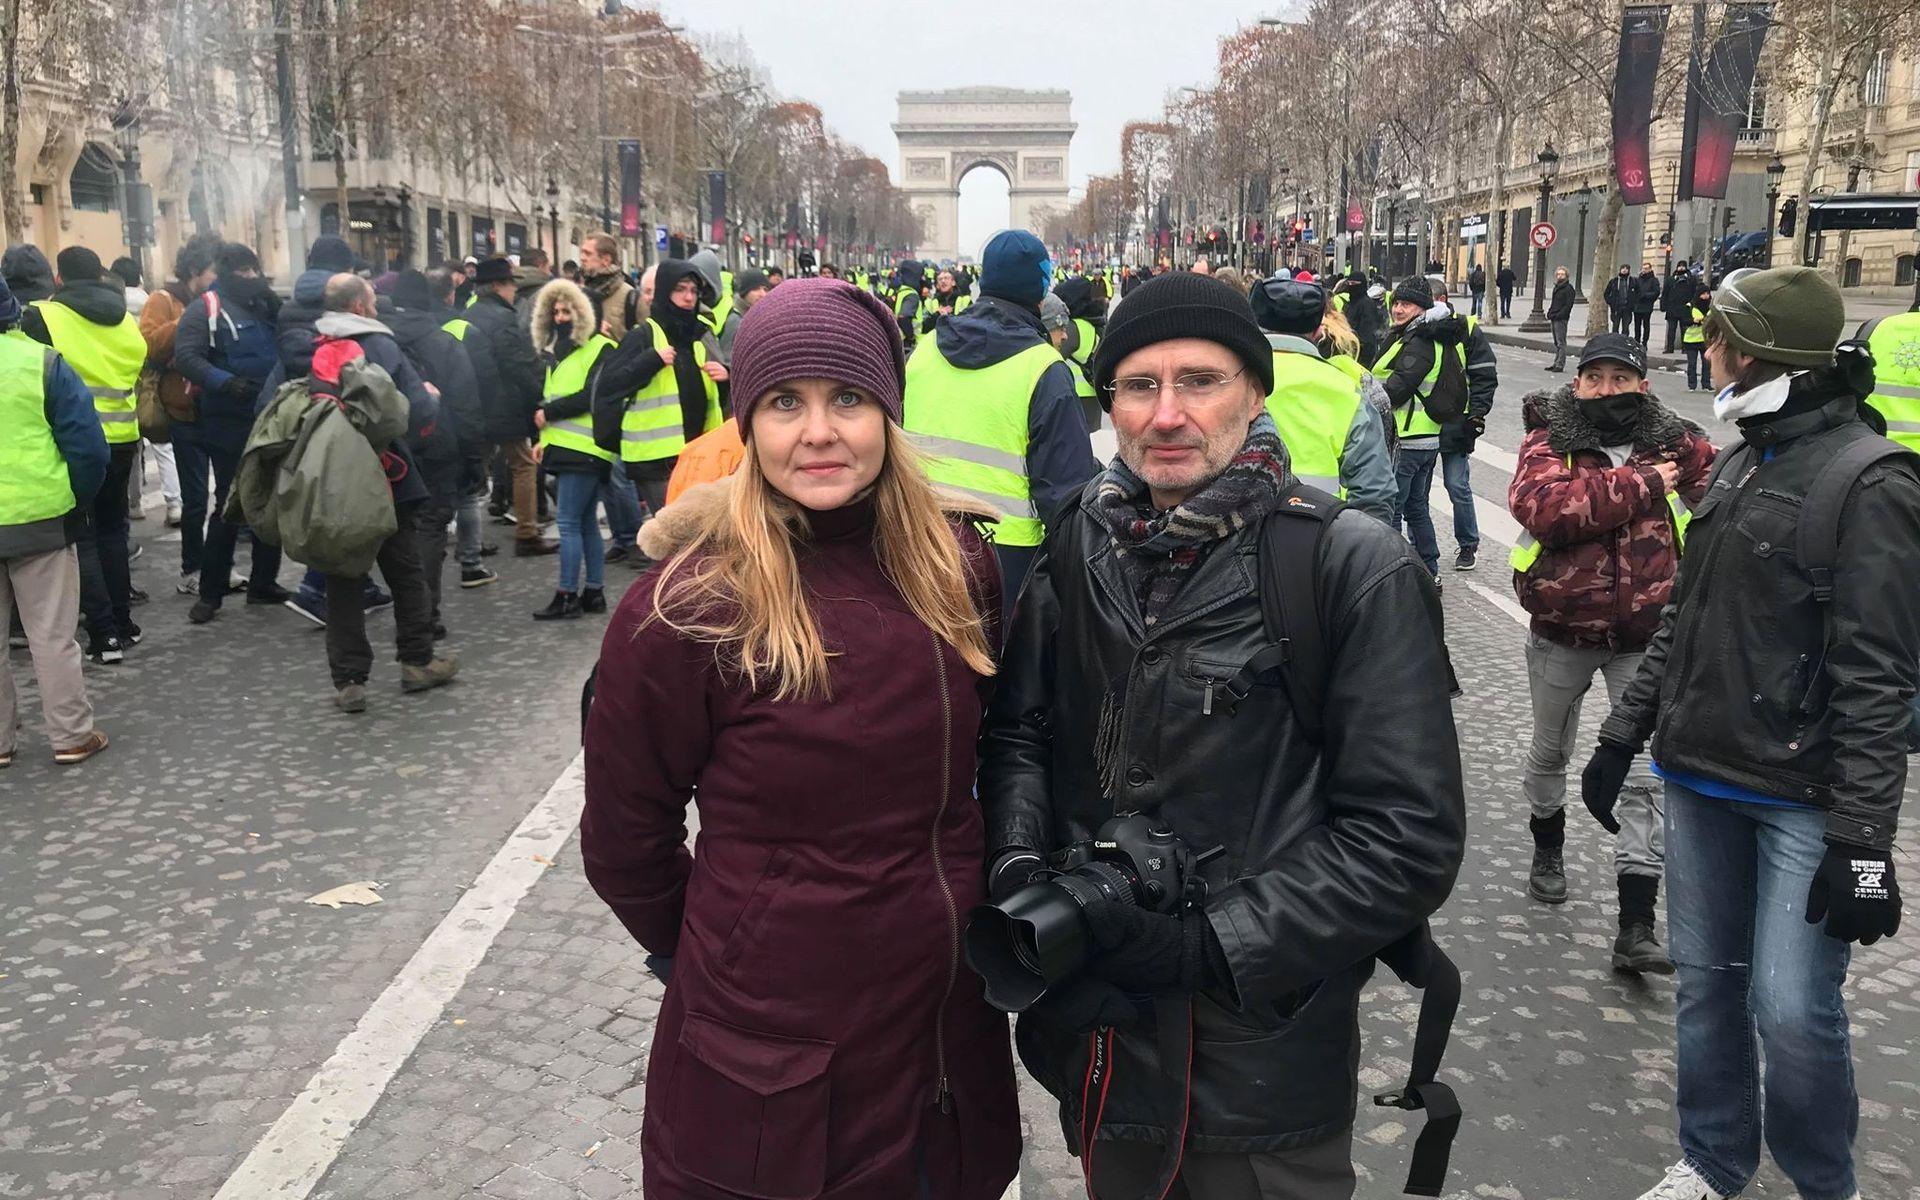 GP:s utsända Hanna Rydén och fotograf Carl von Scheele befinner sig i Paris.